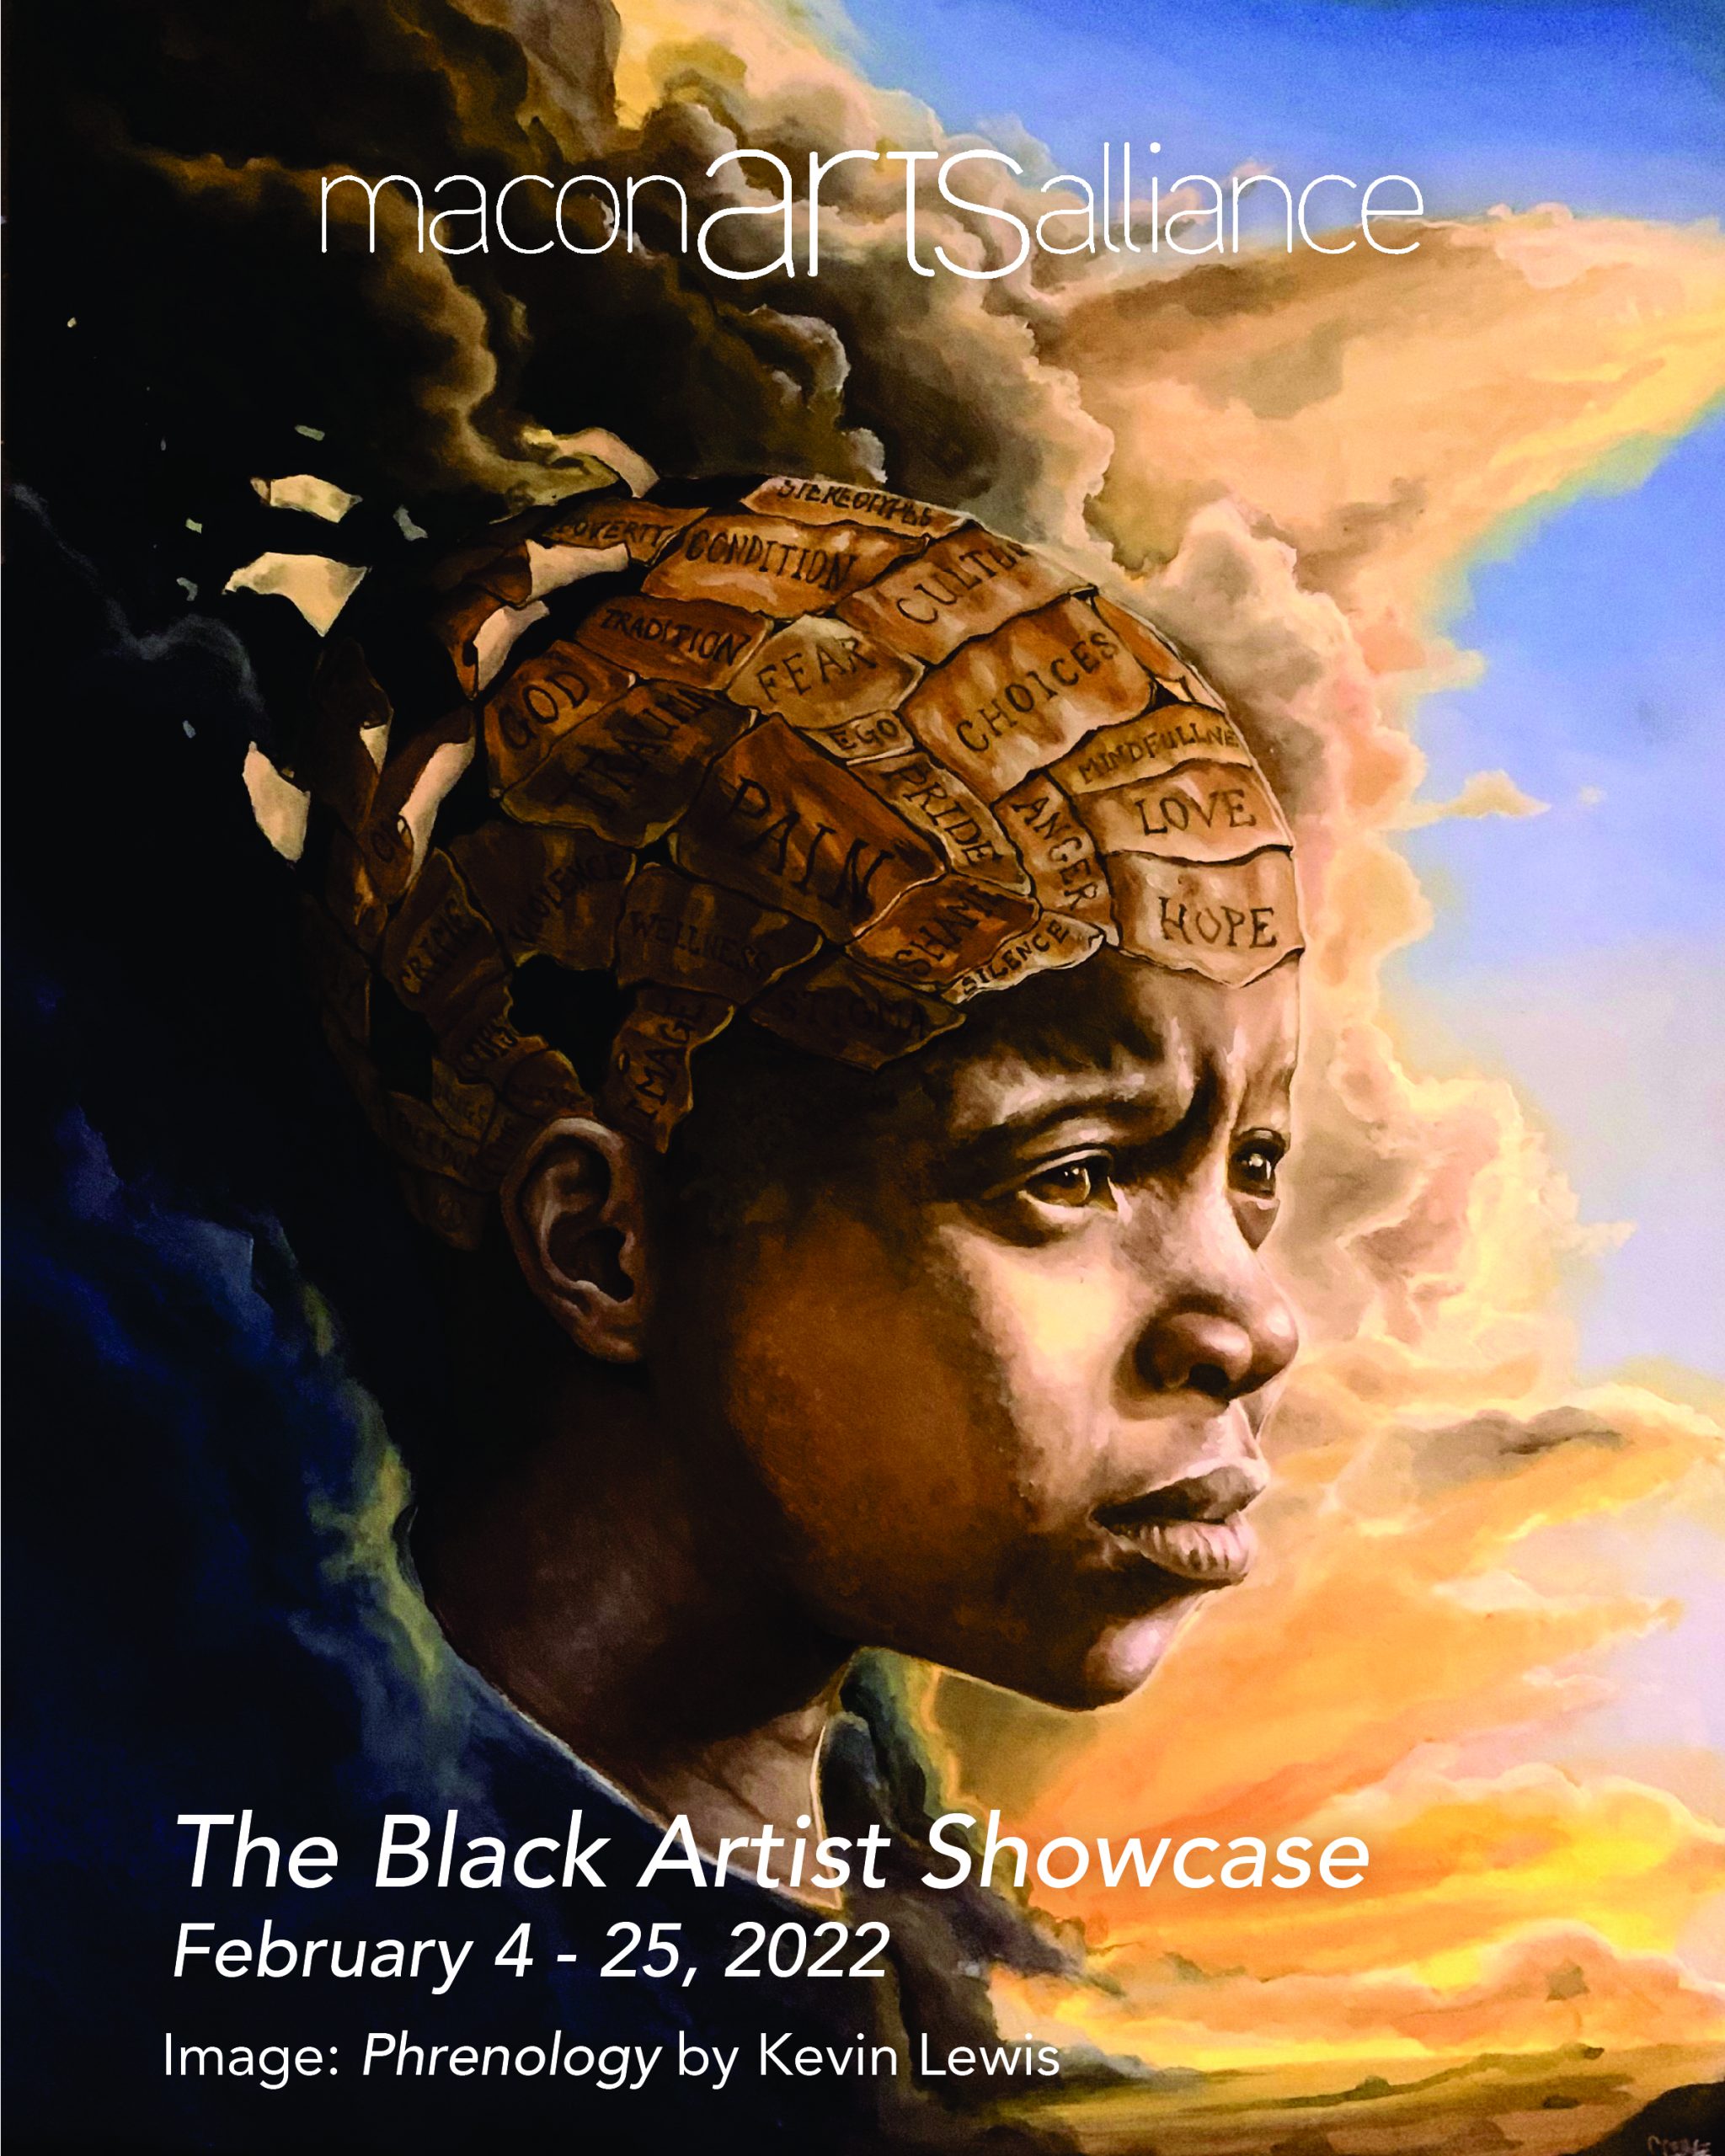 The Black Artist Showcase